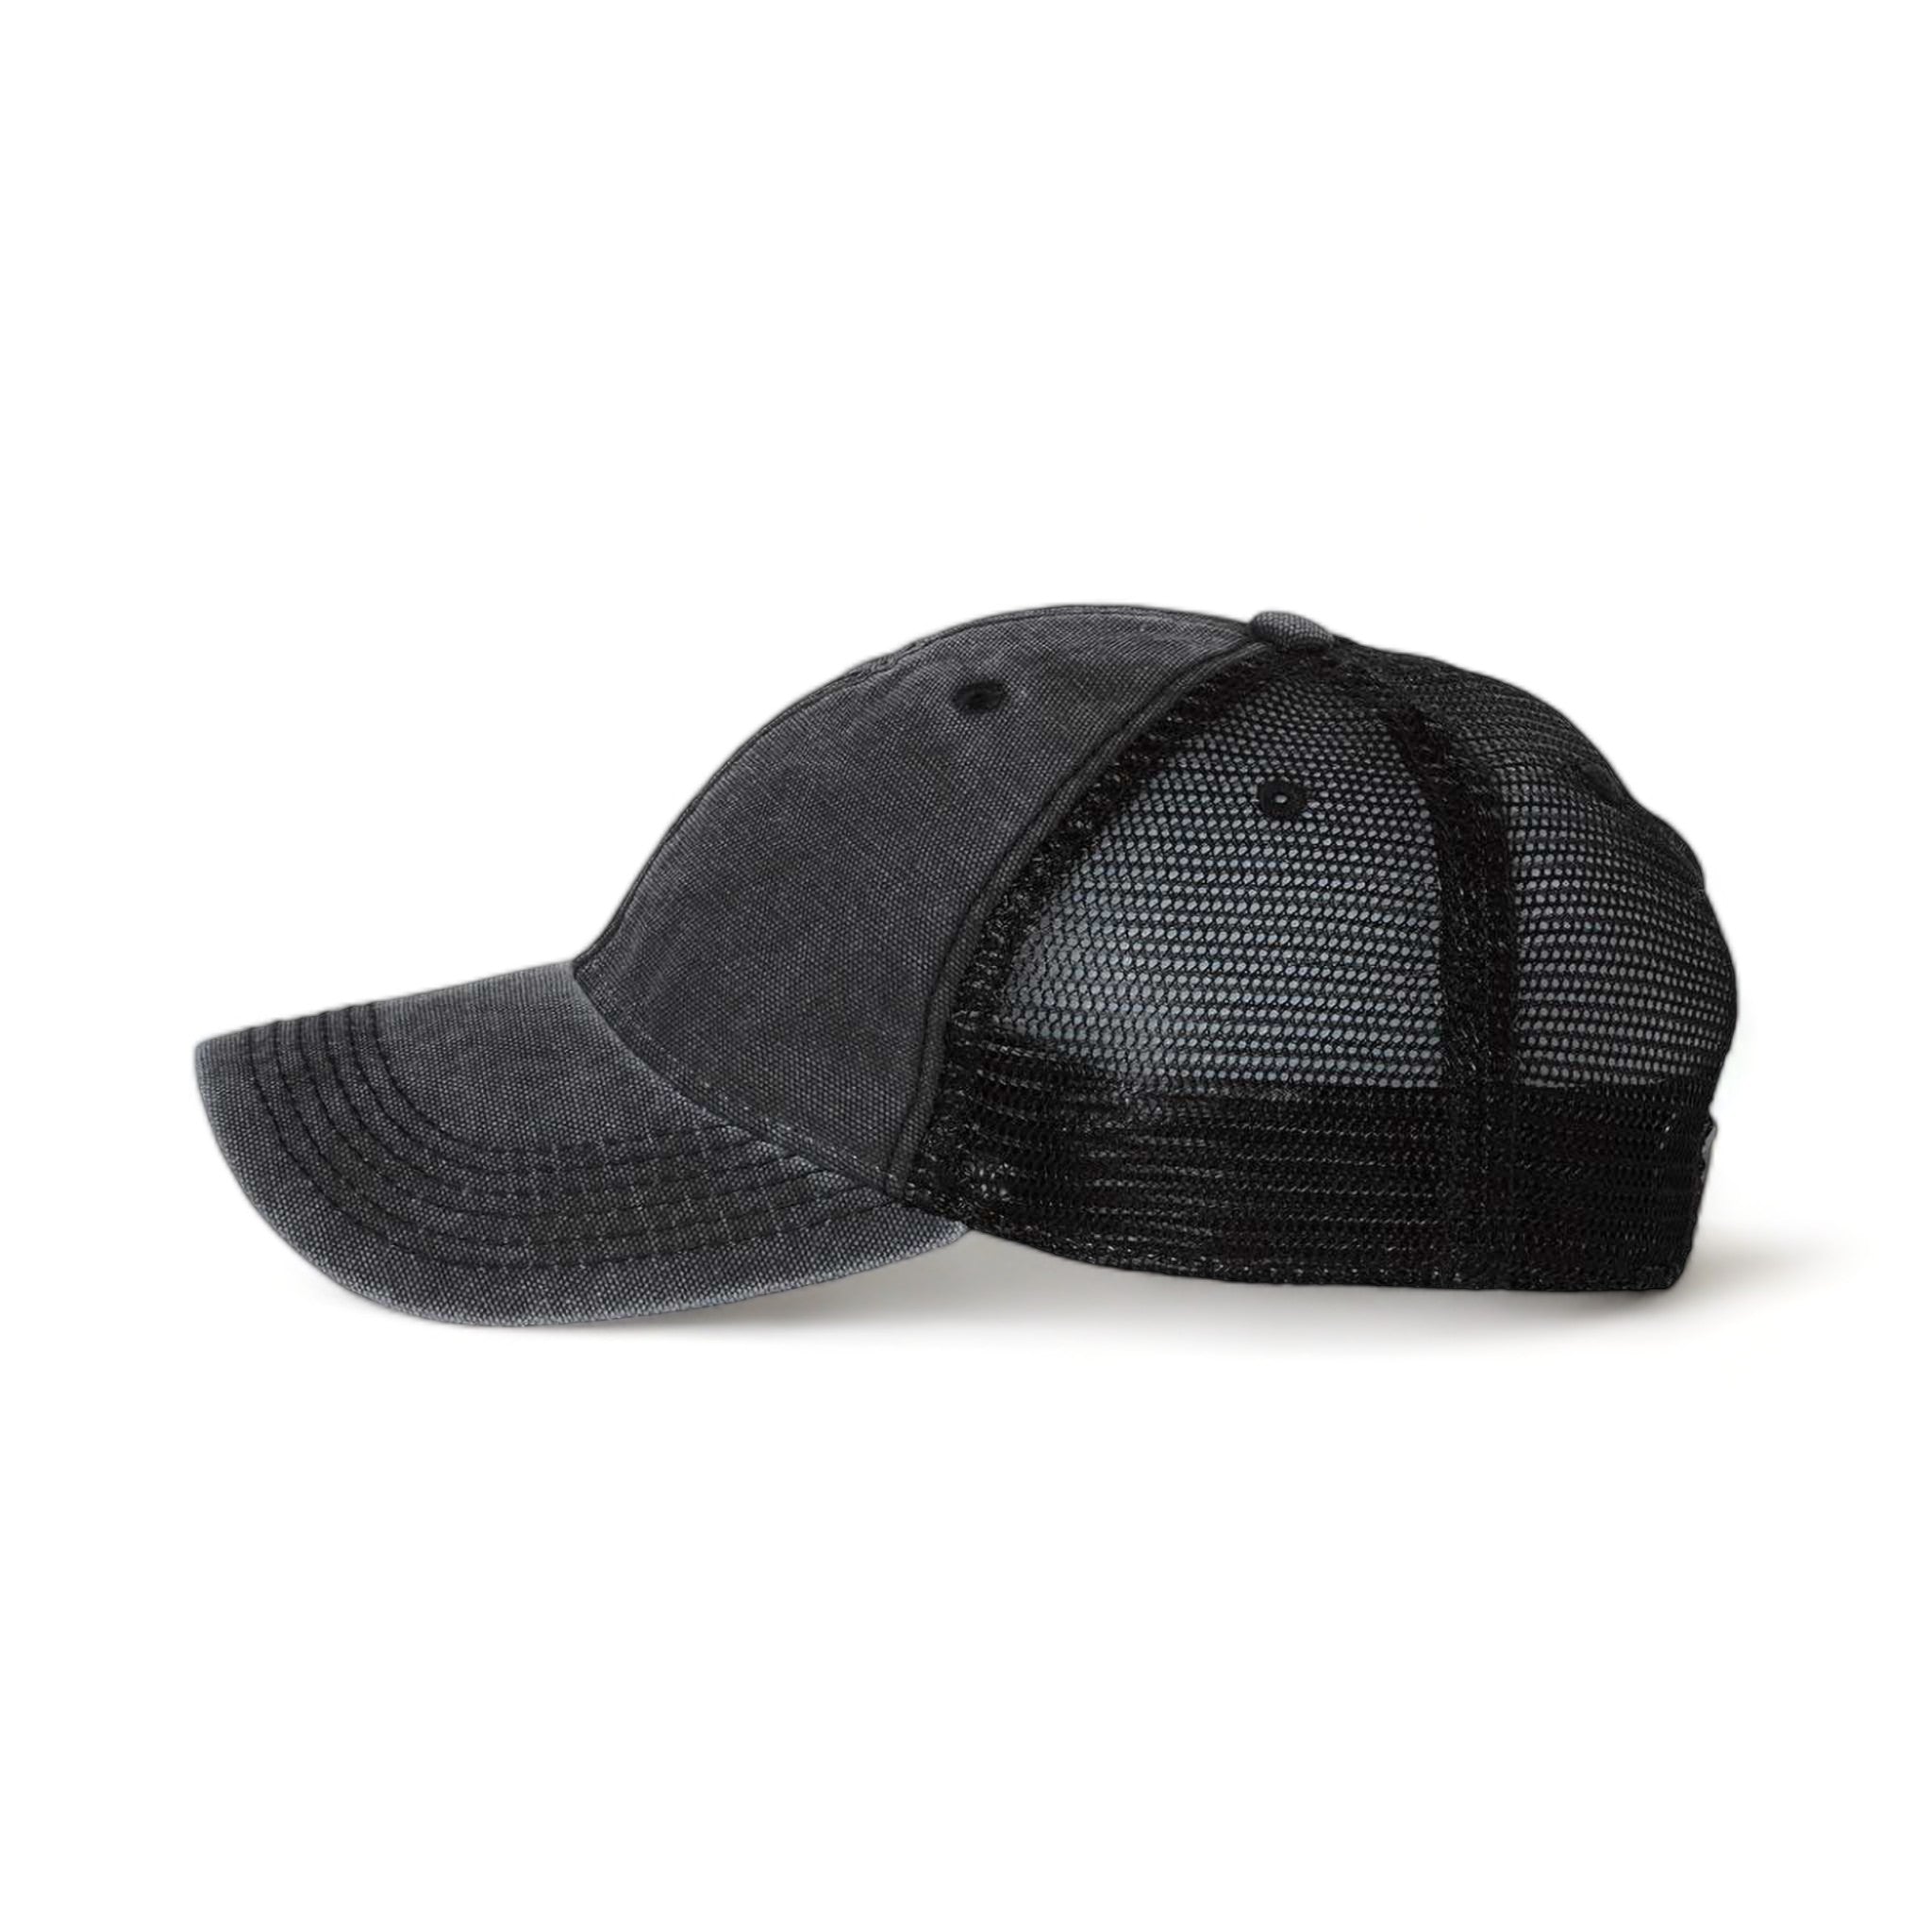 Side view of LEGACY DTA custom hat in black